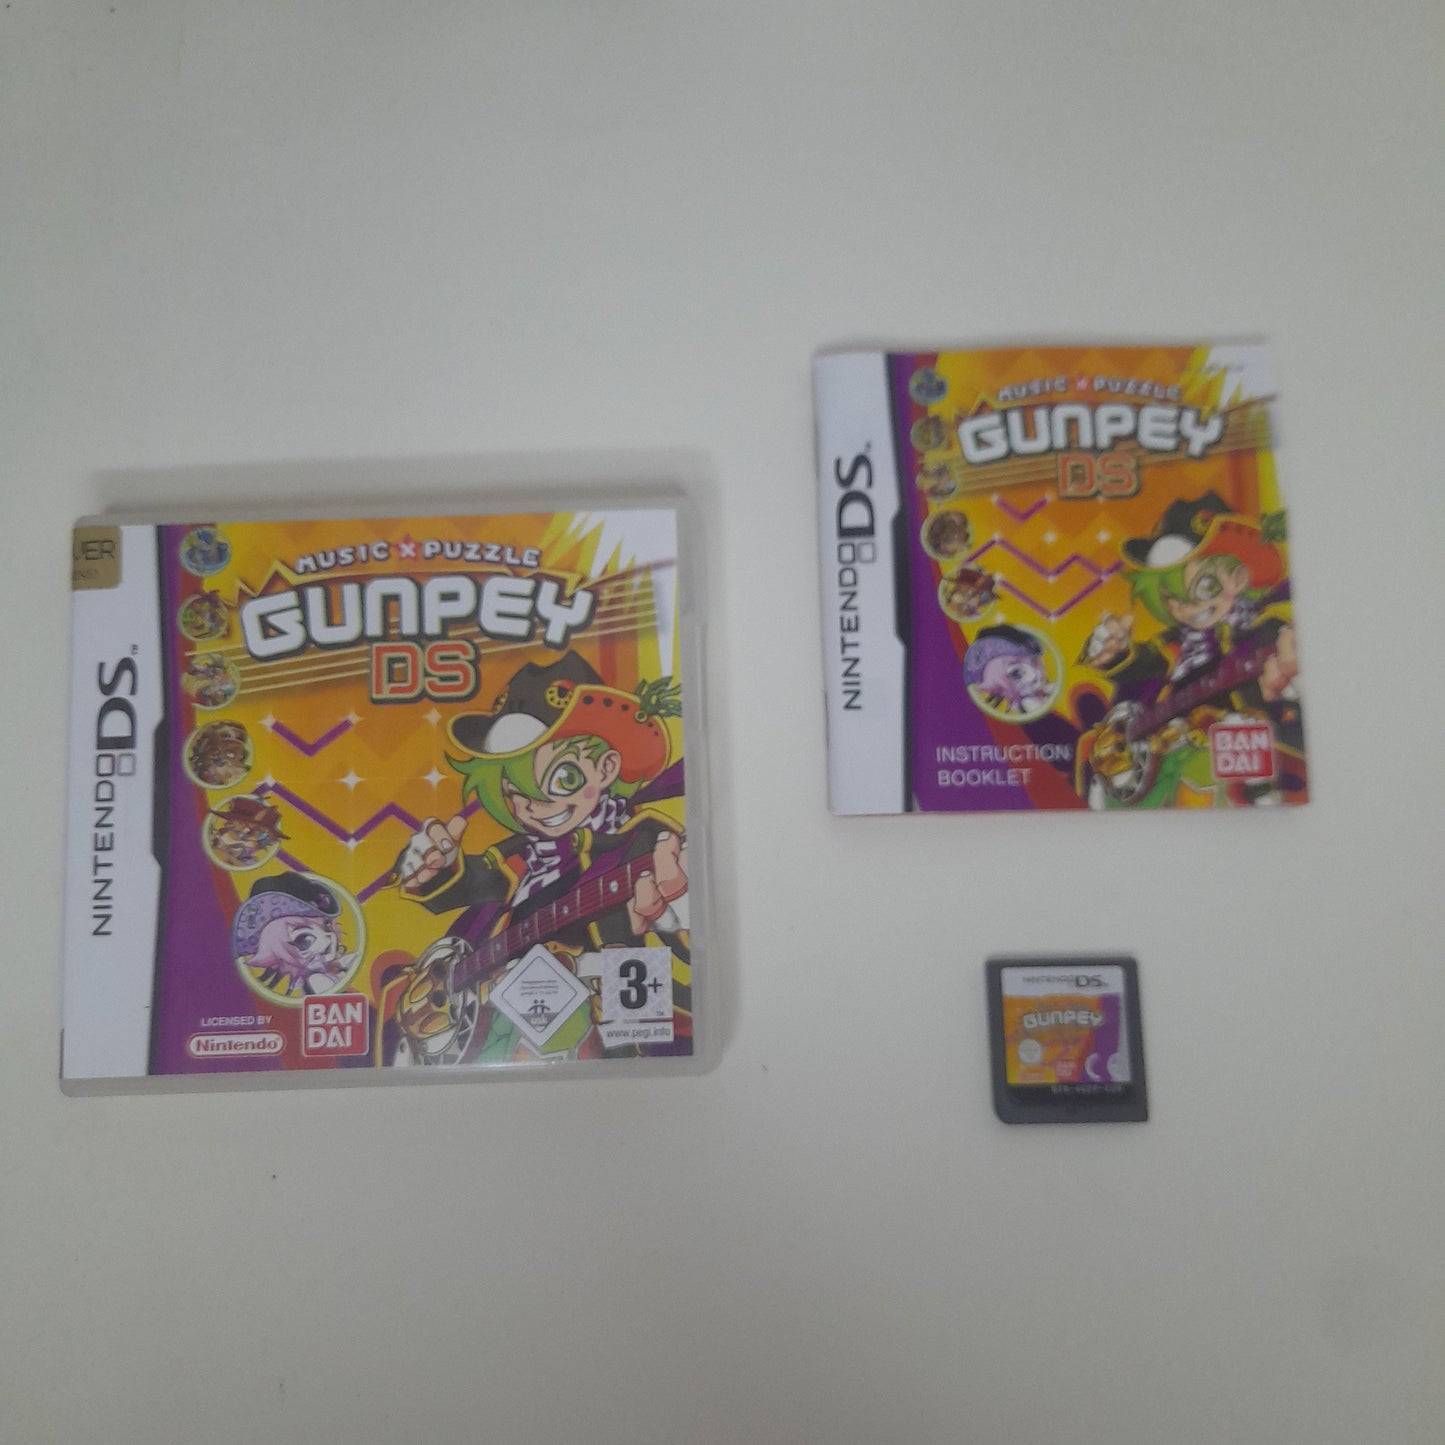 GunPey DS - Music x Puzzle - Nintendo DS